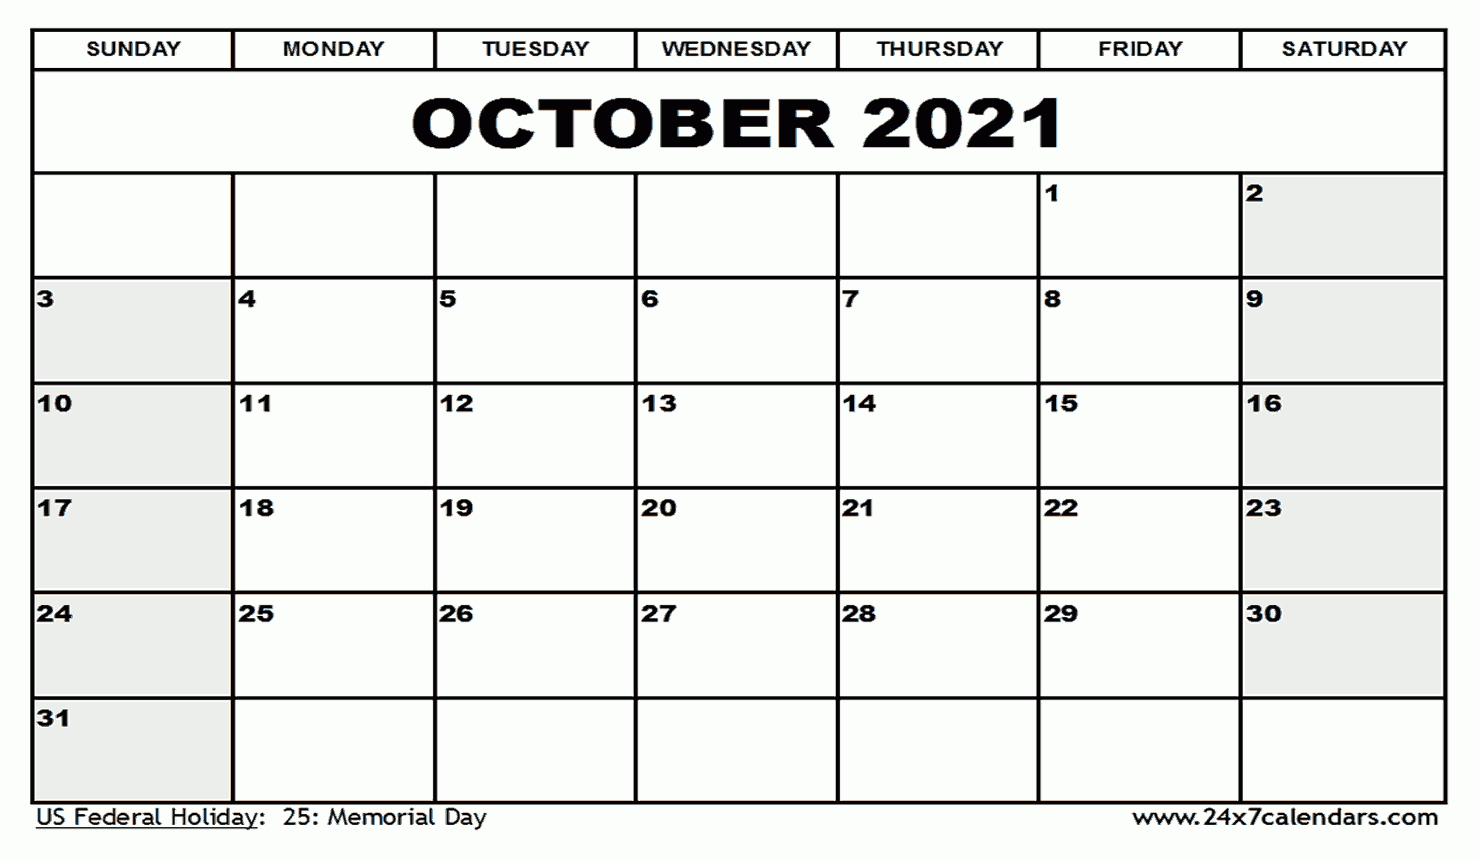 Free Printable October 2021 Calendar : 24X7Calendars-Editable Calendar October 2021 Sunday Through Saturday